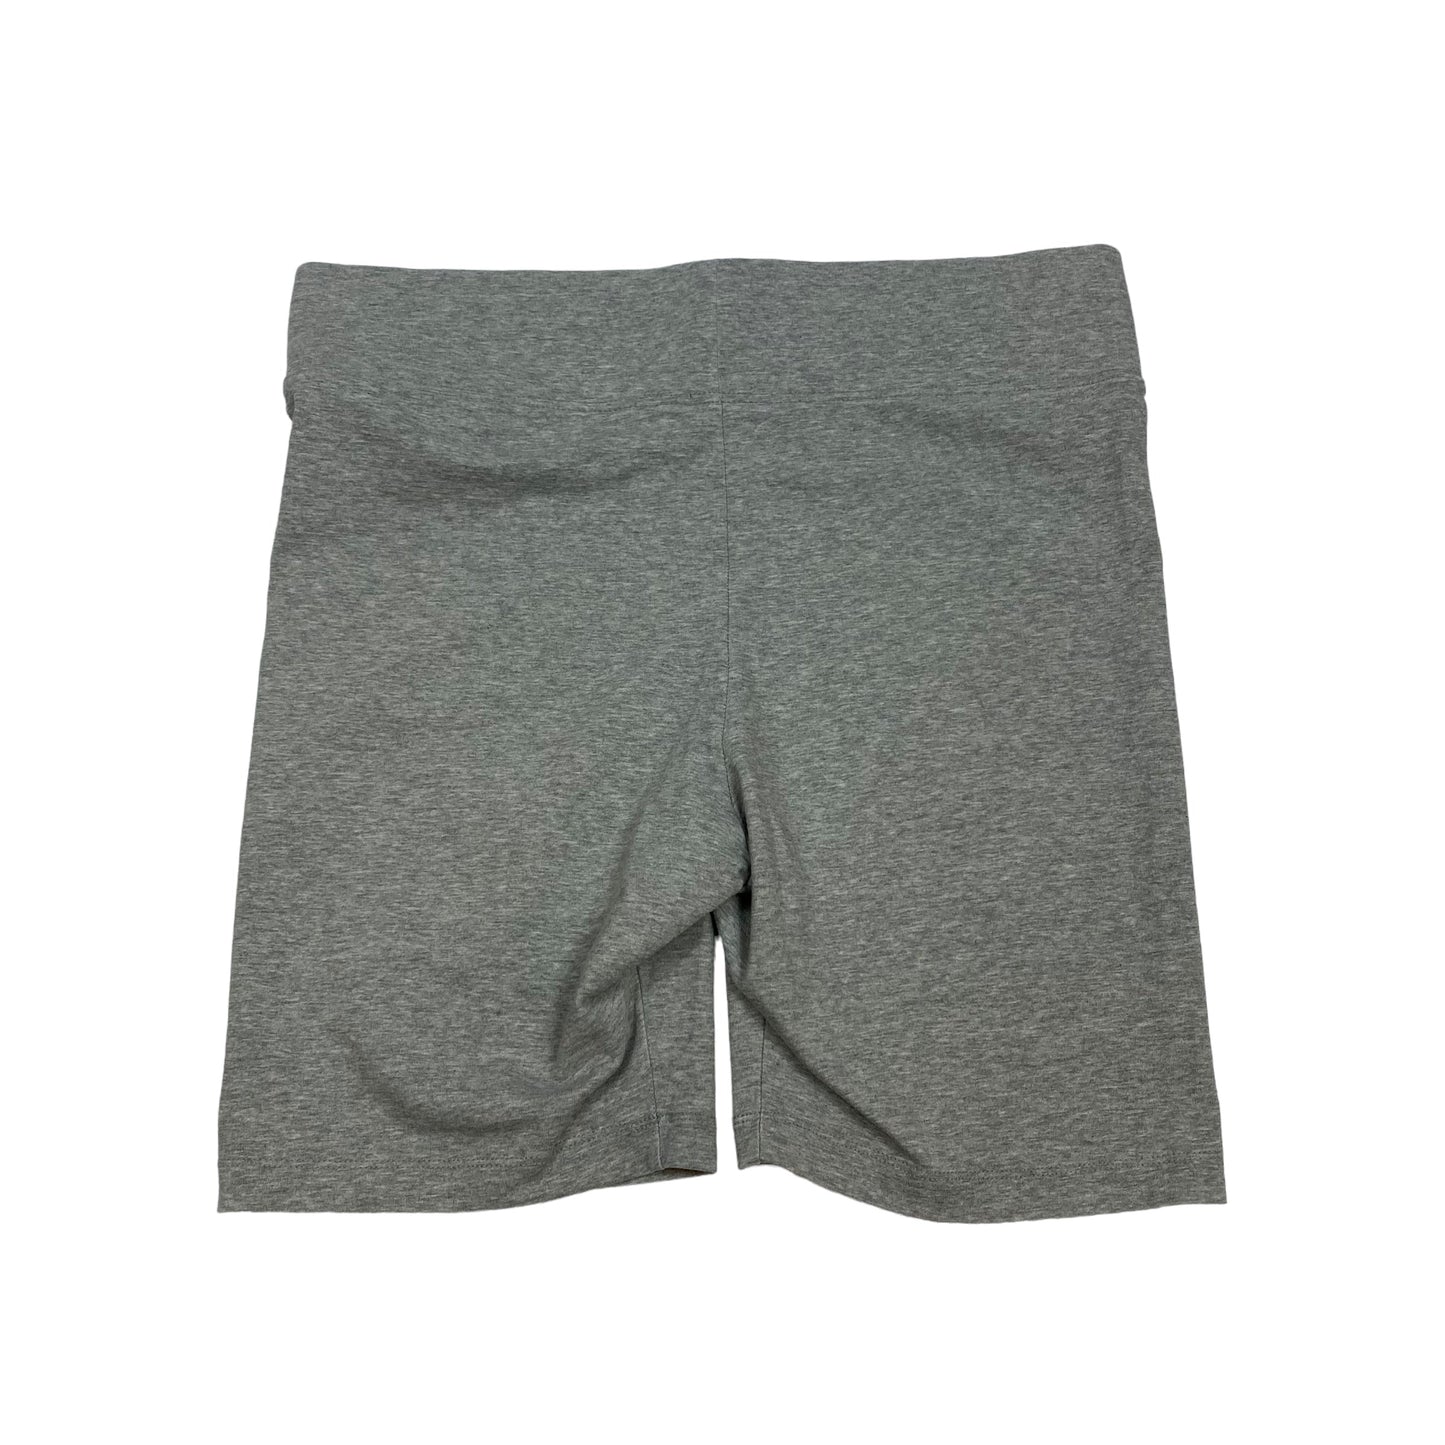 Grey Athletic Shorts Nike Apparel, Size 1x